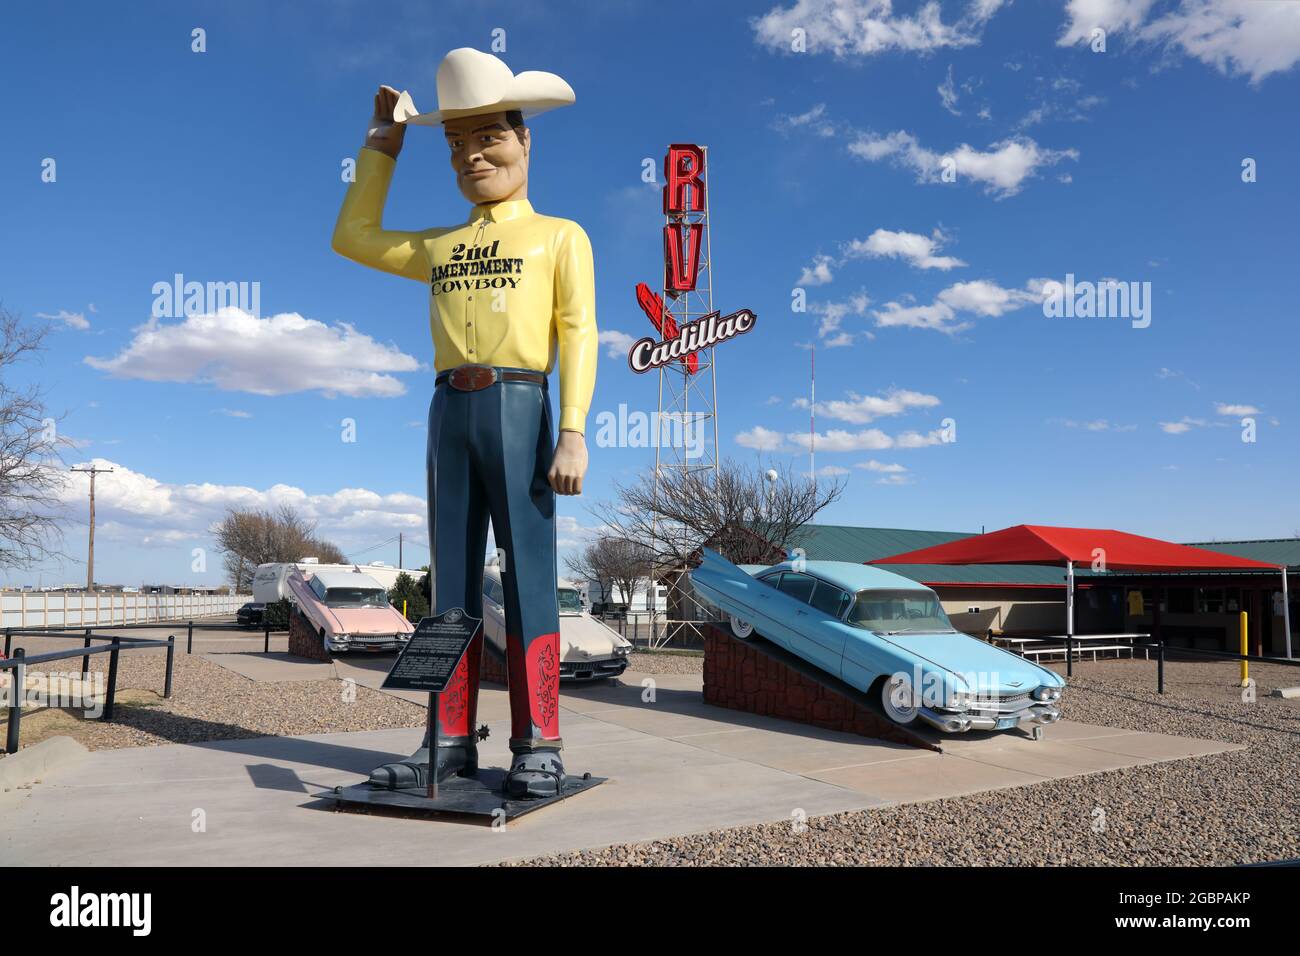 Geographie / Reisen, USA, Texas, Amarillo, 2. Zusatz Cowboy, cadillac RV Park, Route 66, Amarillo, ZUSÄTZLICHE-RIGHTS-CLEARANCE-INFO-NOT-AVAILABLE Stockfoto